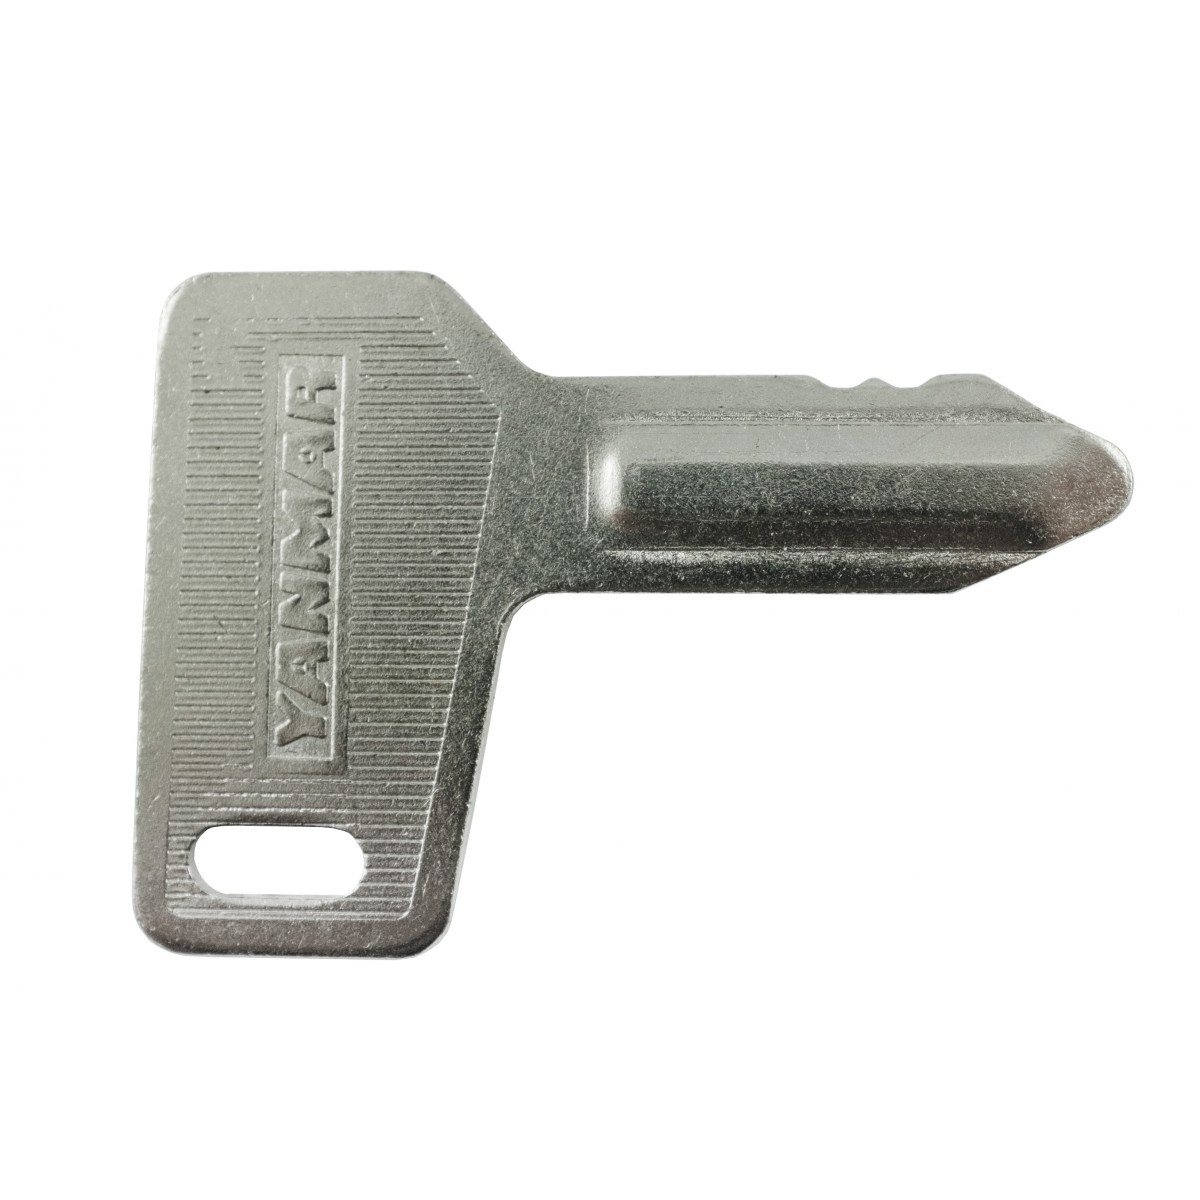 Schlüssel, Schlüssel zum Zündschalter Yanmar 301, John Deere, Kubota. 933110-00301